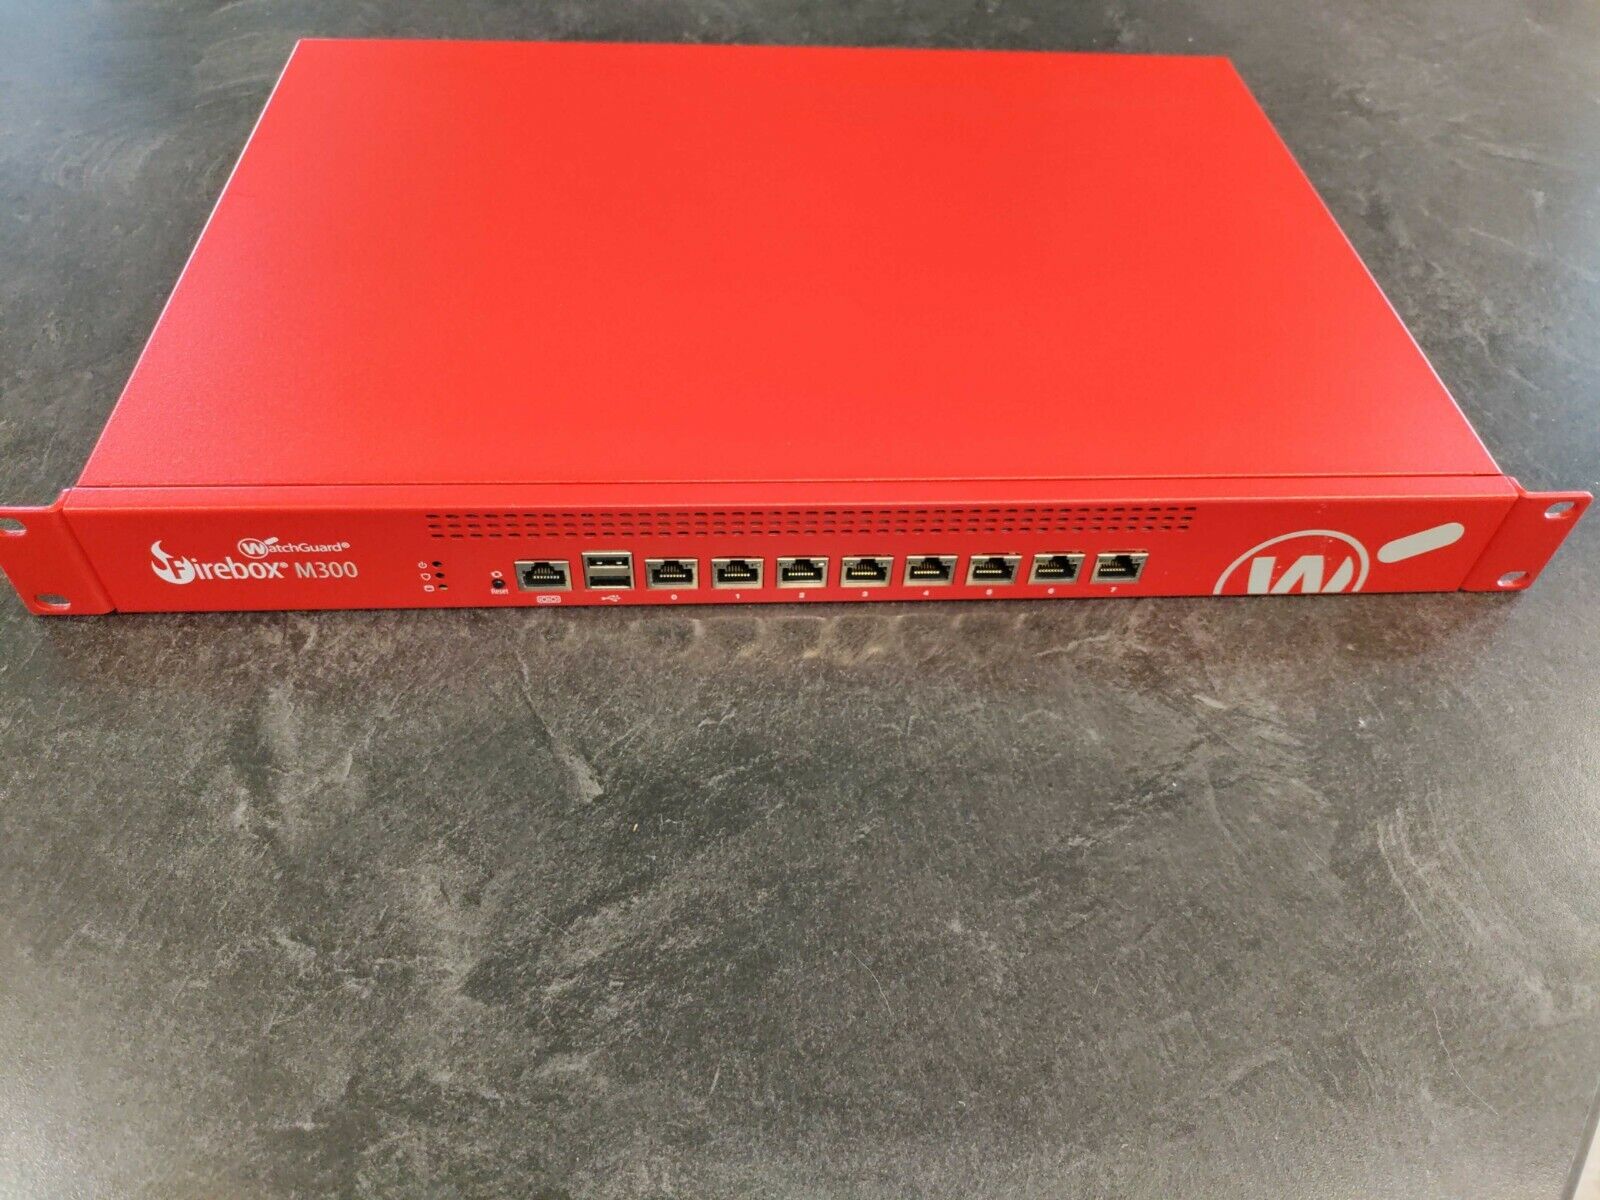 Watchguard Firebox M300 Firewall Network Security Appliance ML3AE8 - WORKING